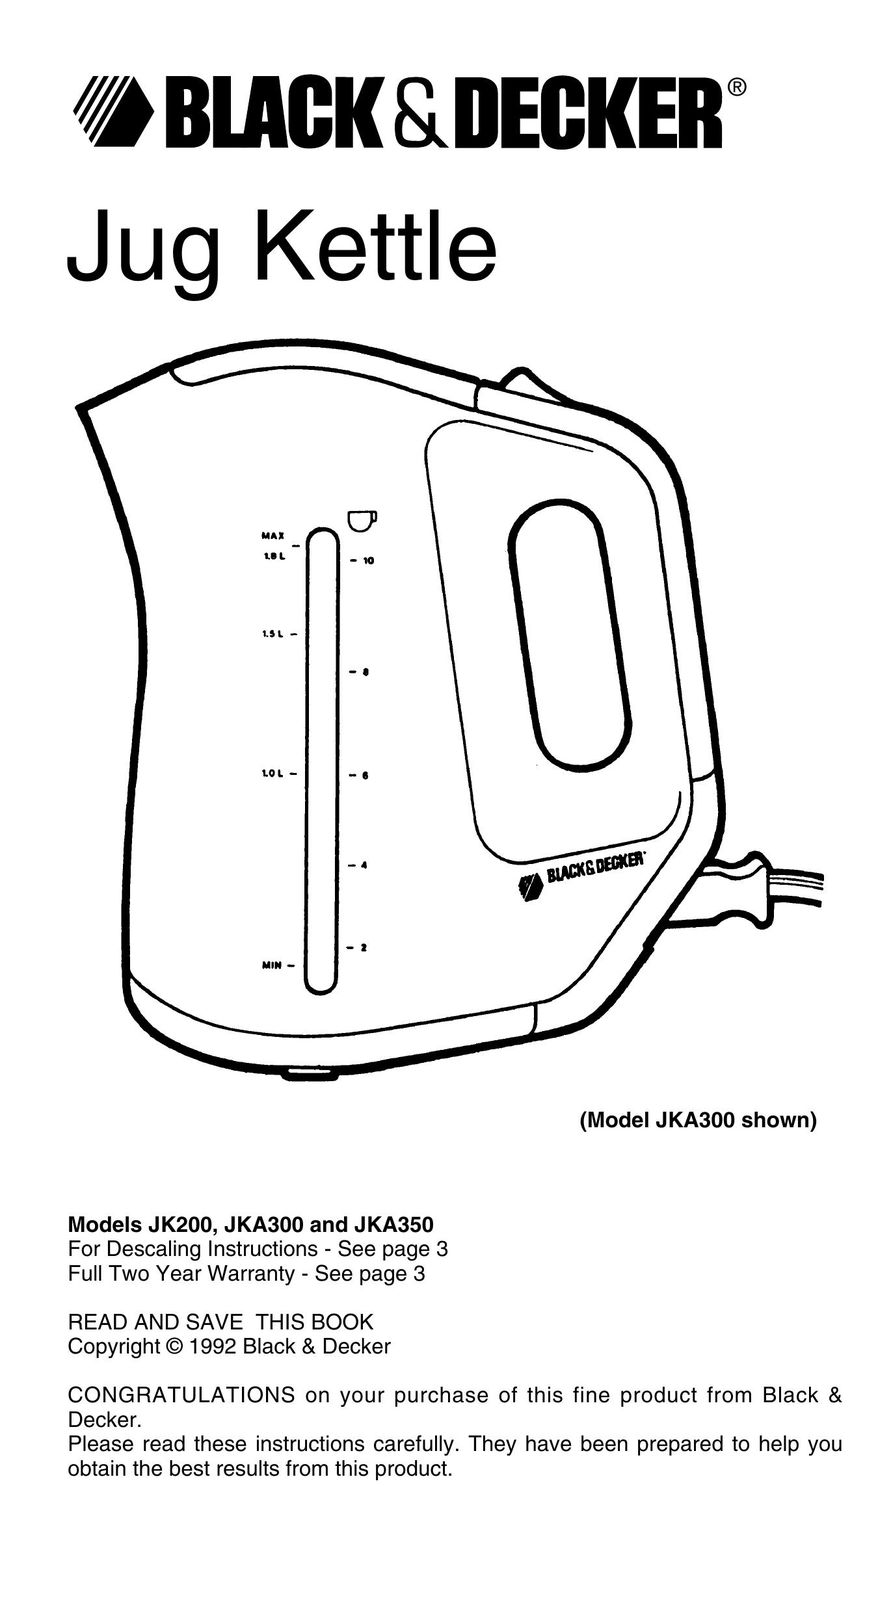 Black & Decker JKA350 Hot Beverage Maker User Manual